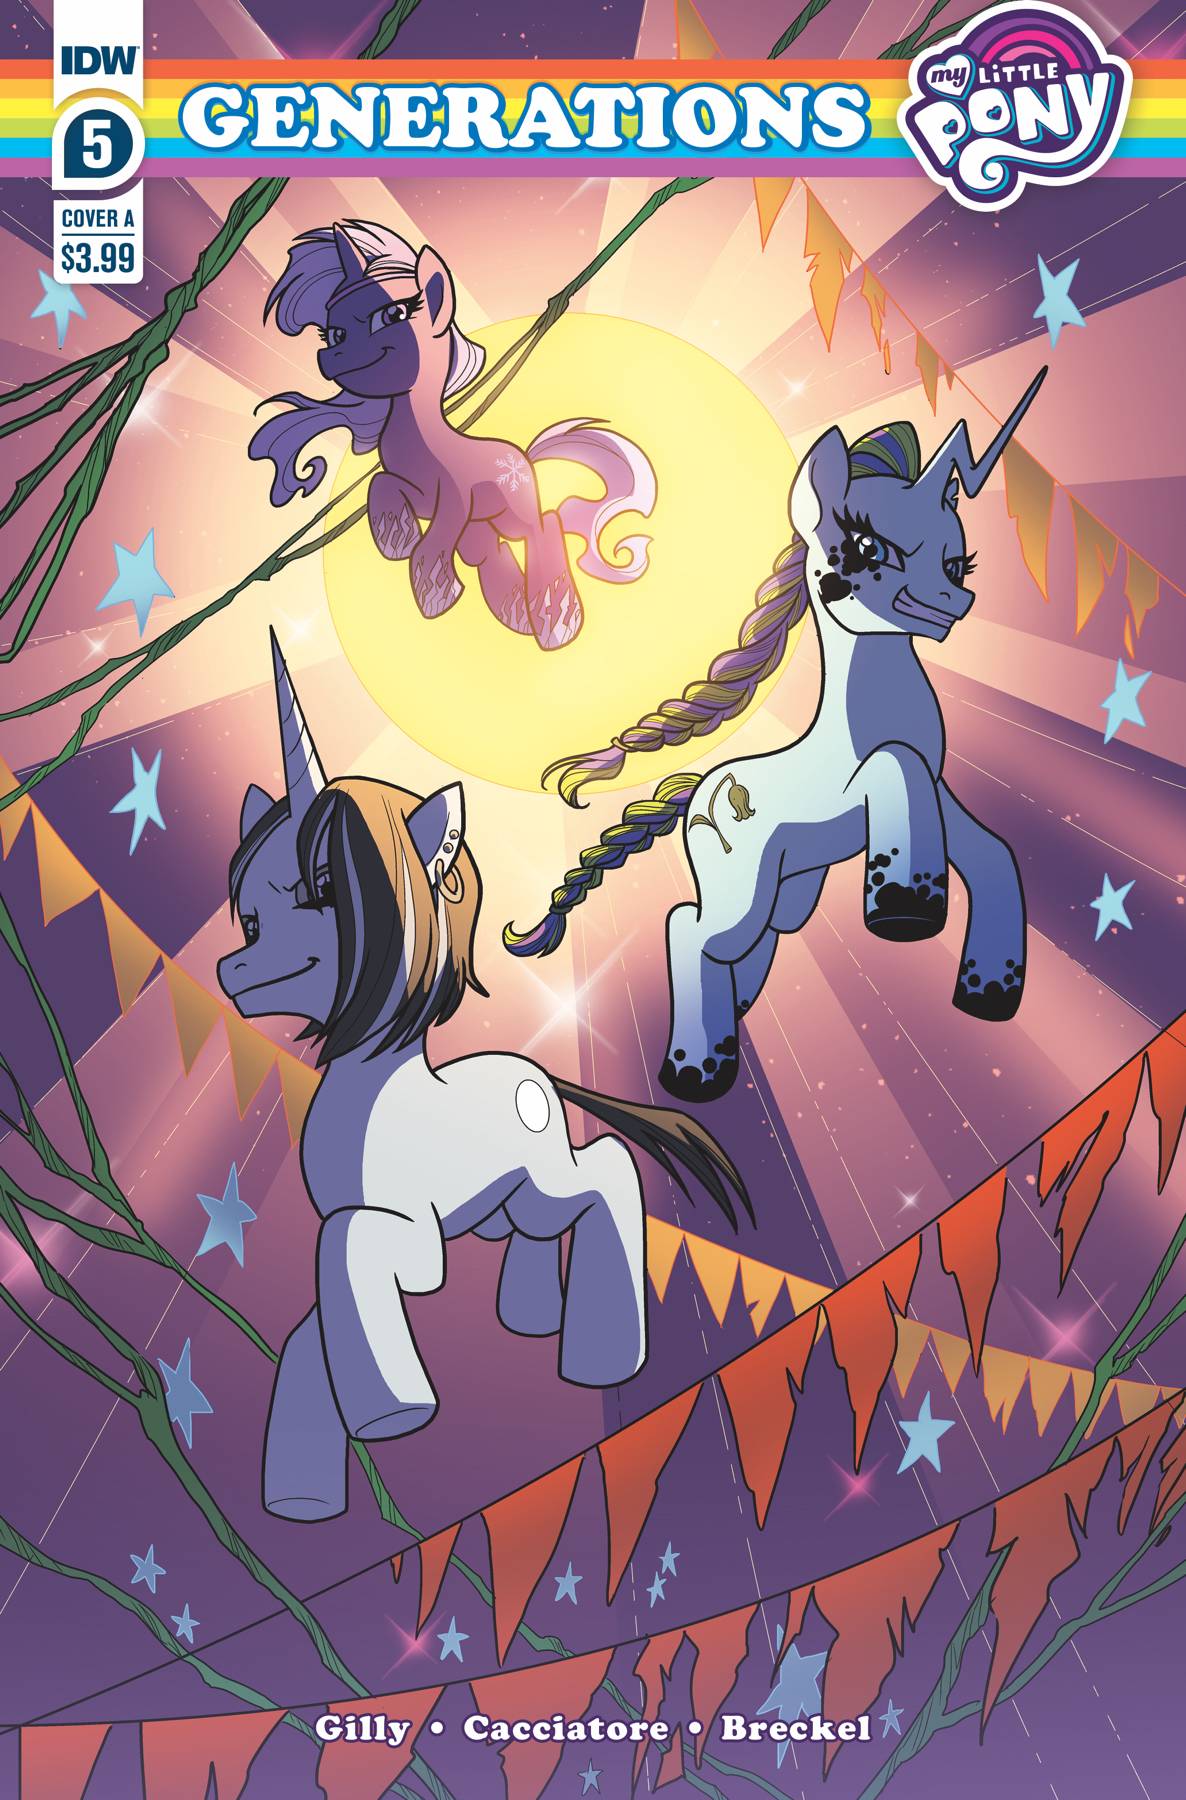 My Little Pony: Generations Issue 5 | My Little Pony Friendship Magic Wiki | Fandom